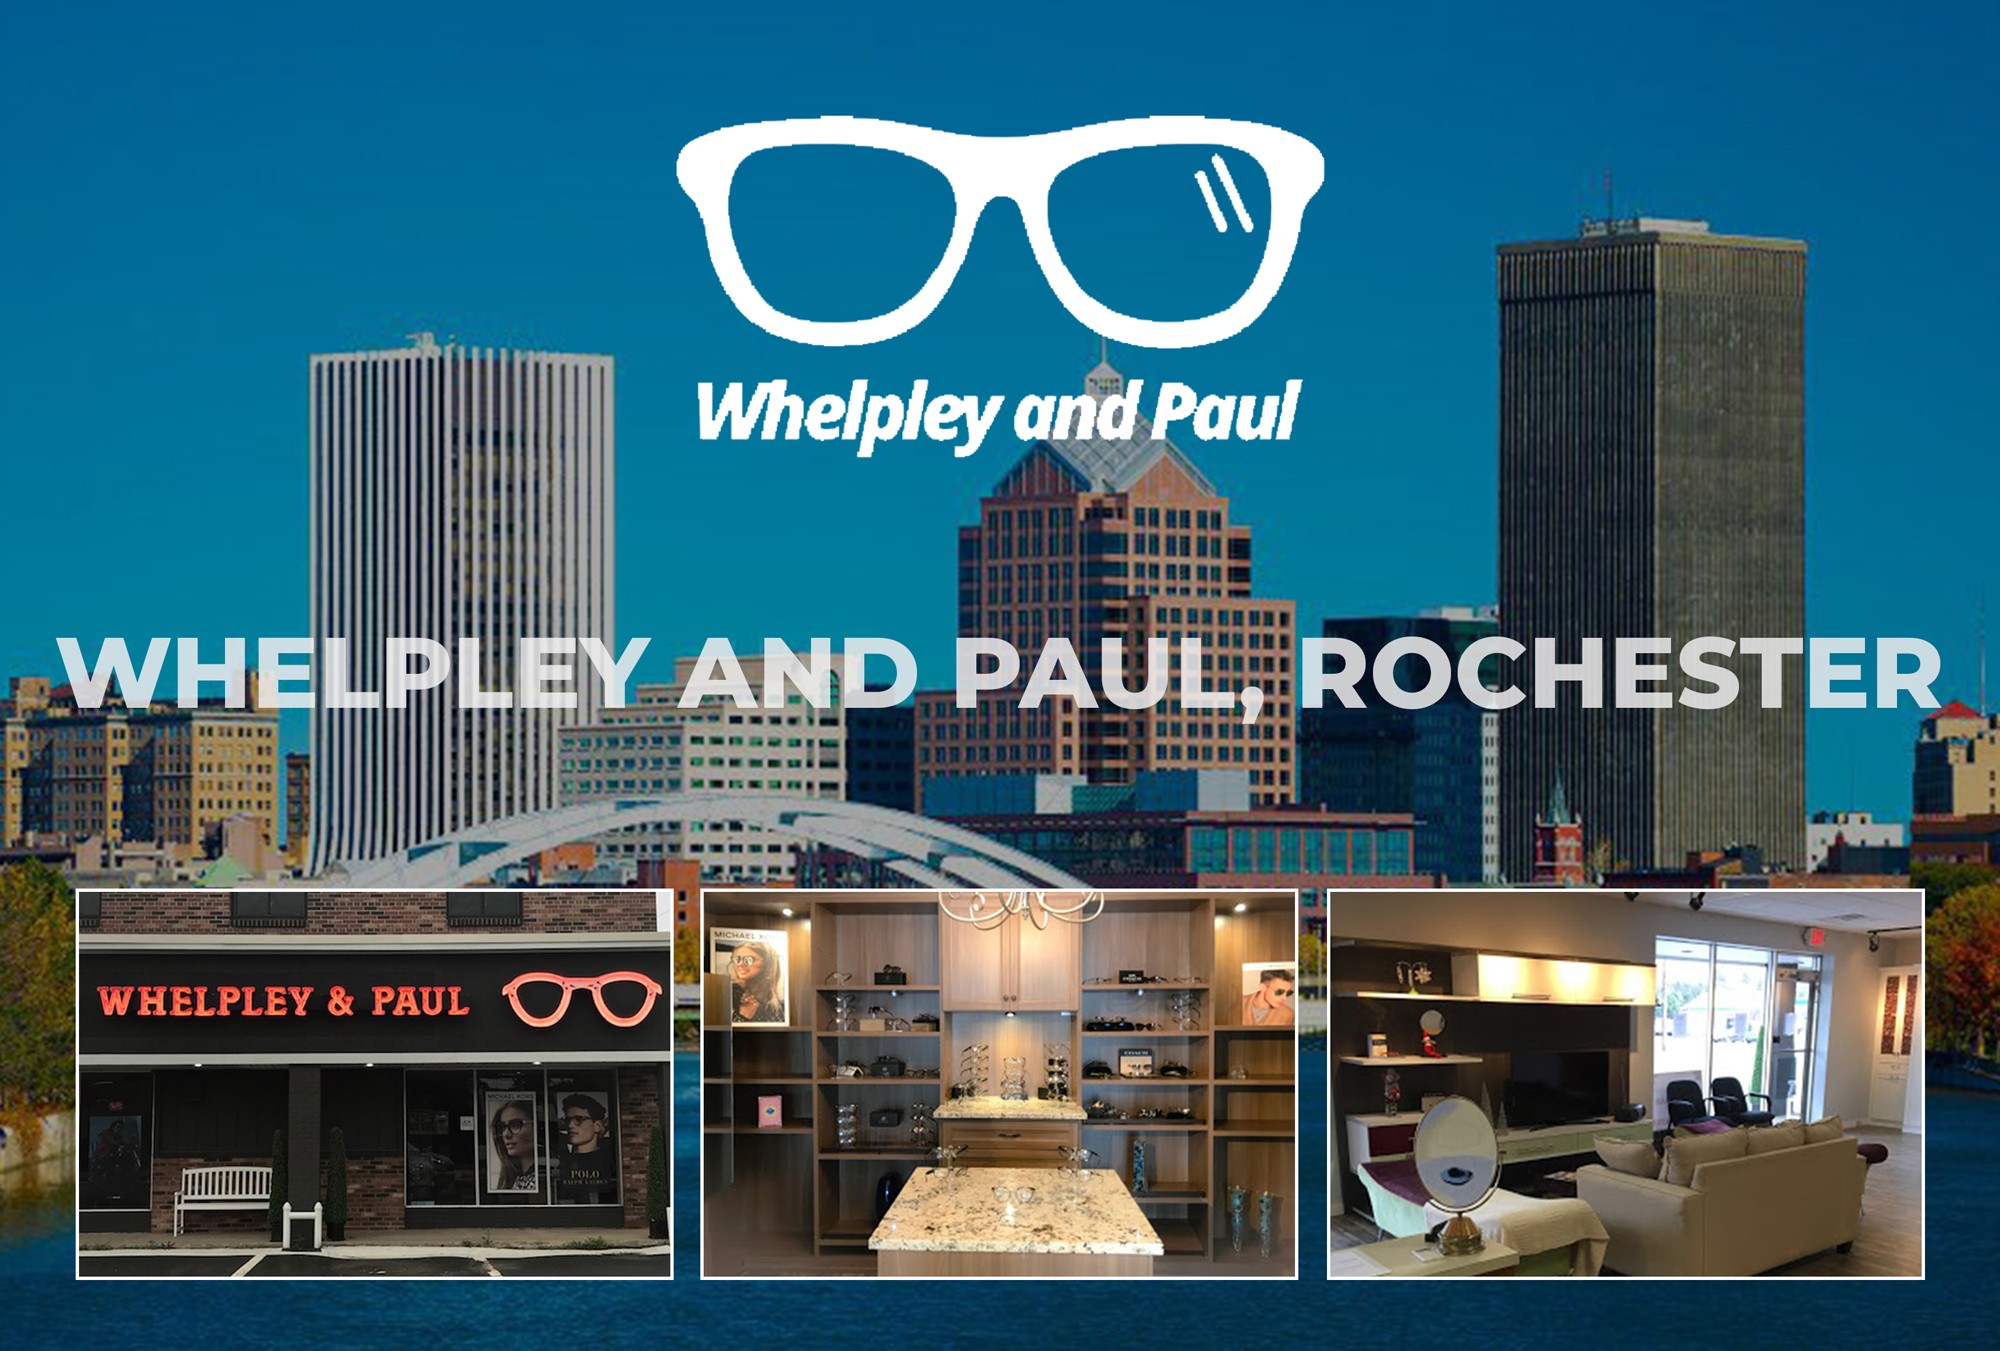 Whelpley and Paul